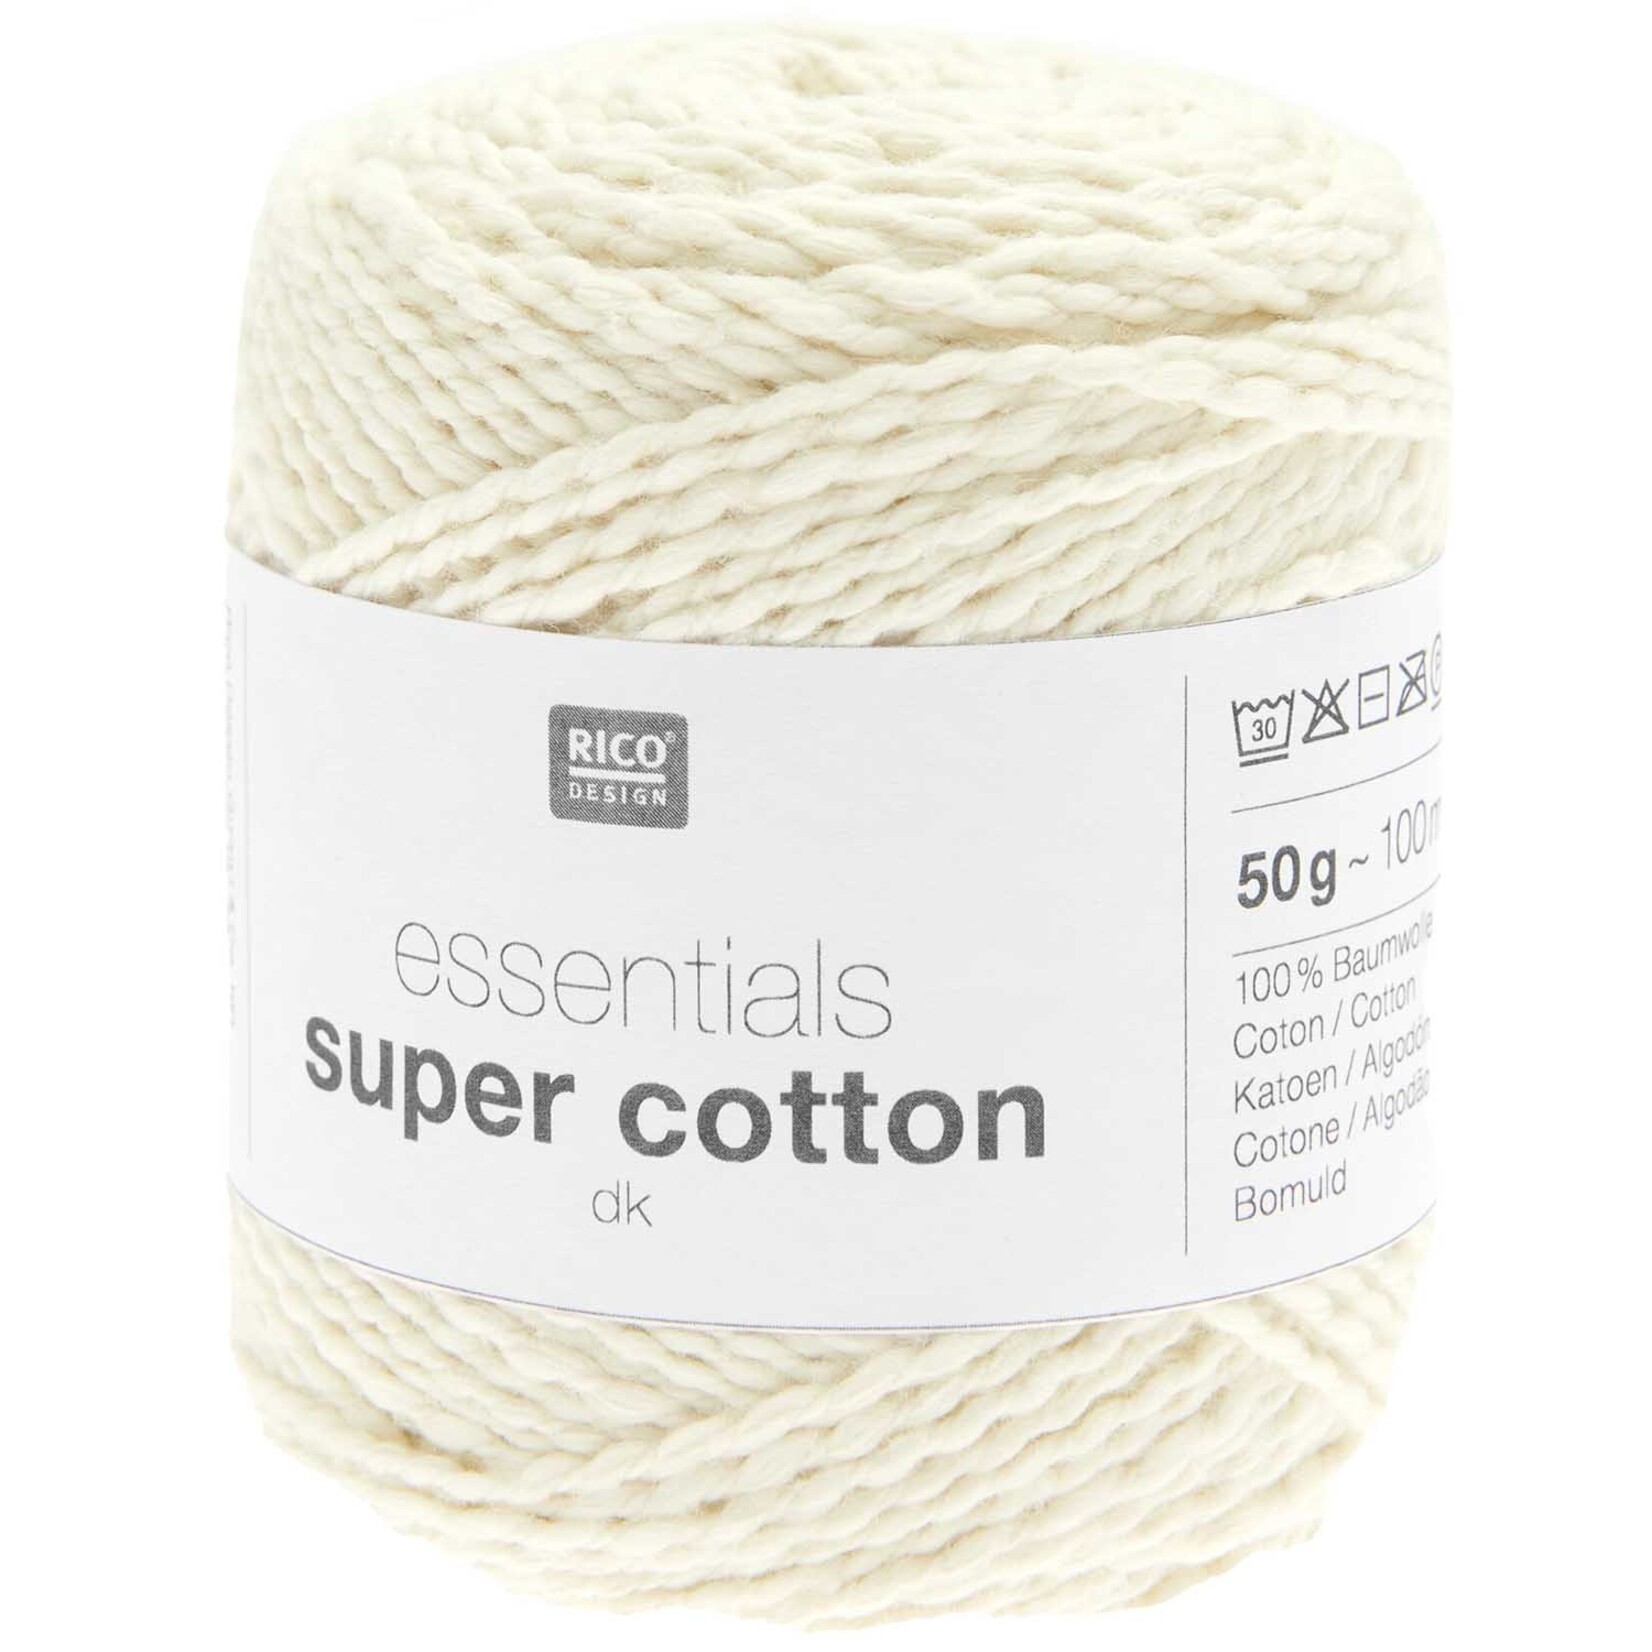 Rico Super Cotton dk 003 Cream